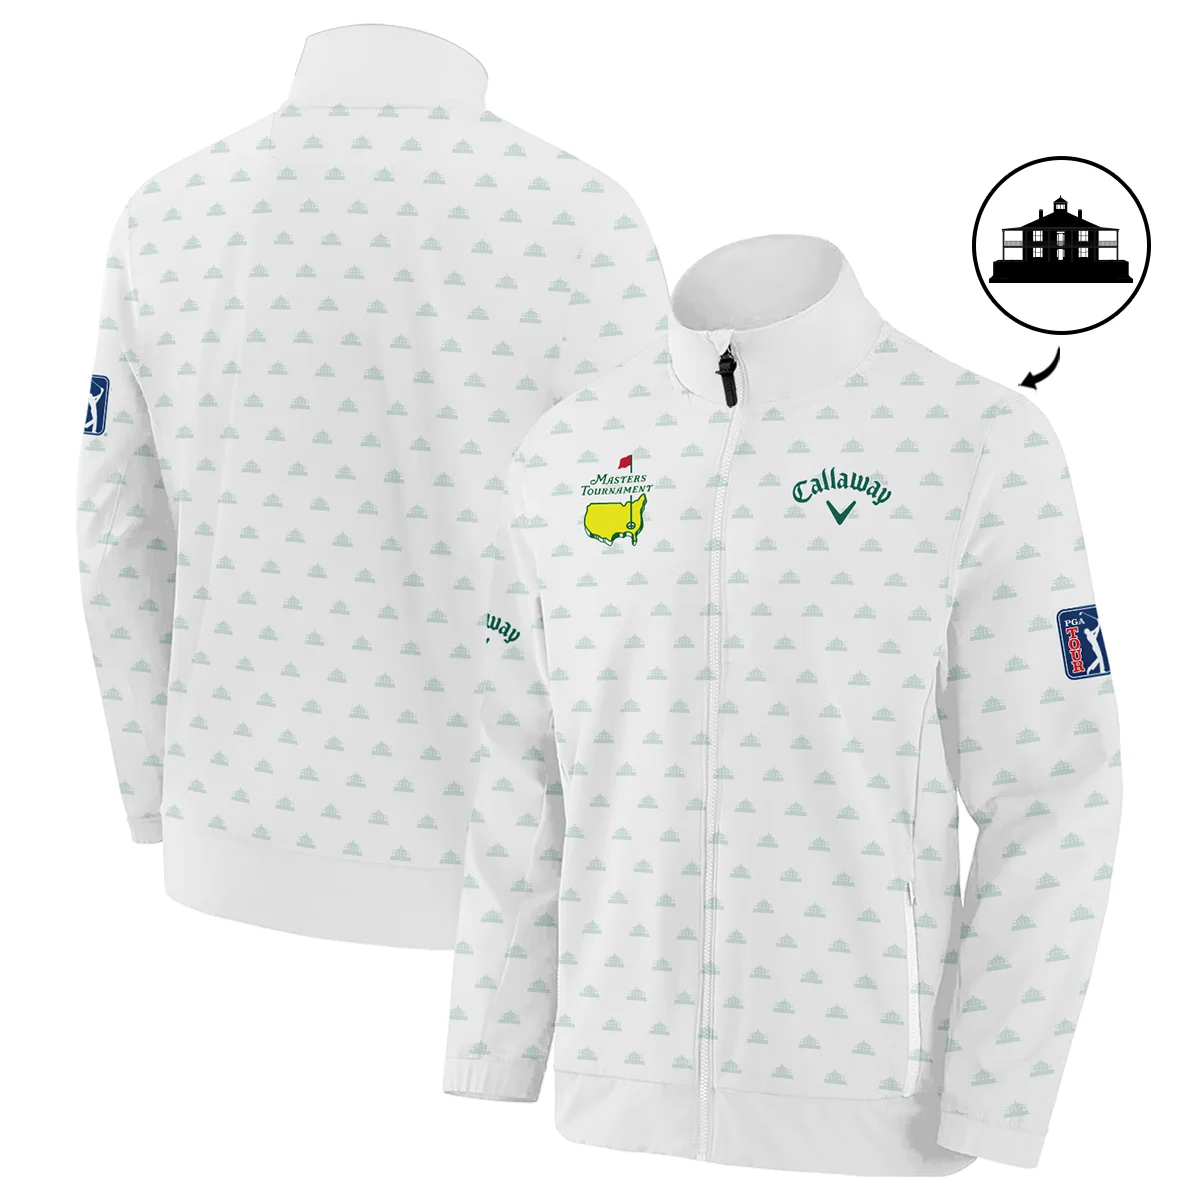 Masters Tournament Golf Sport Callaway Zipper Polo Shirt Sports Cup Pattern White Green Zipper Polo Shirt For Men